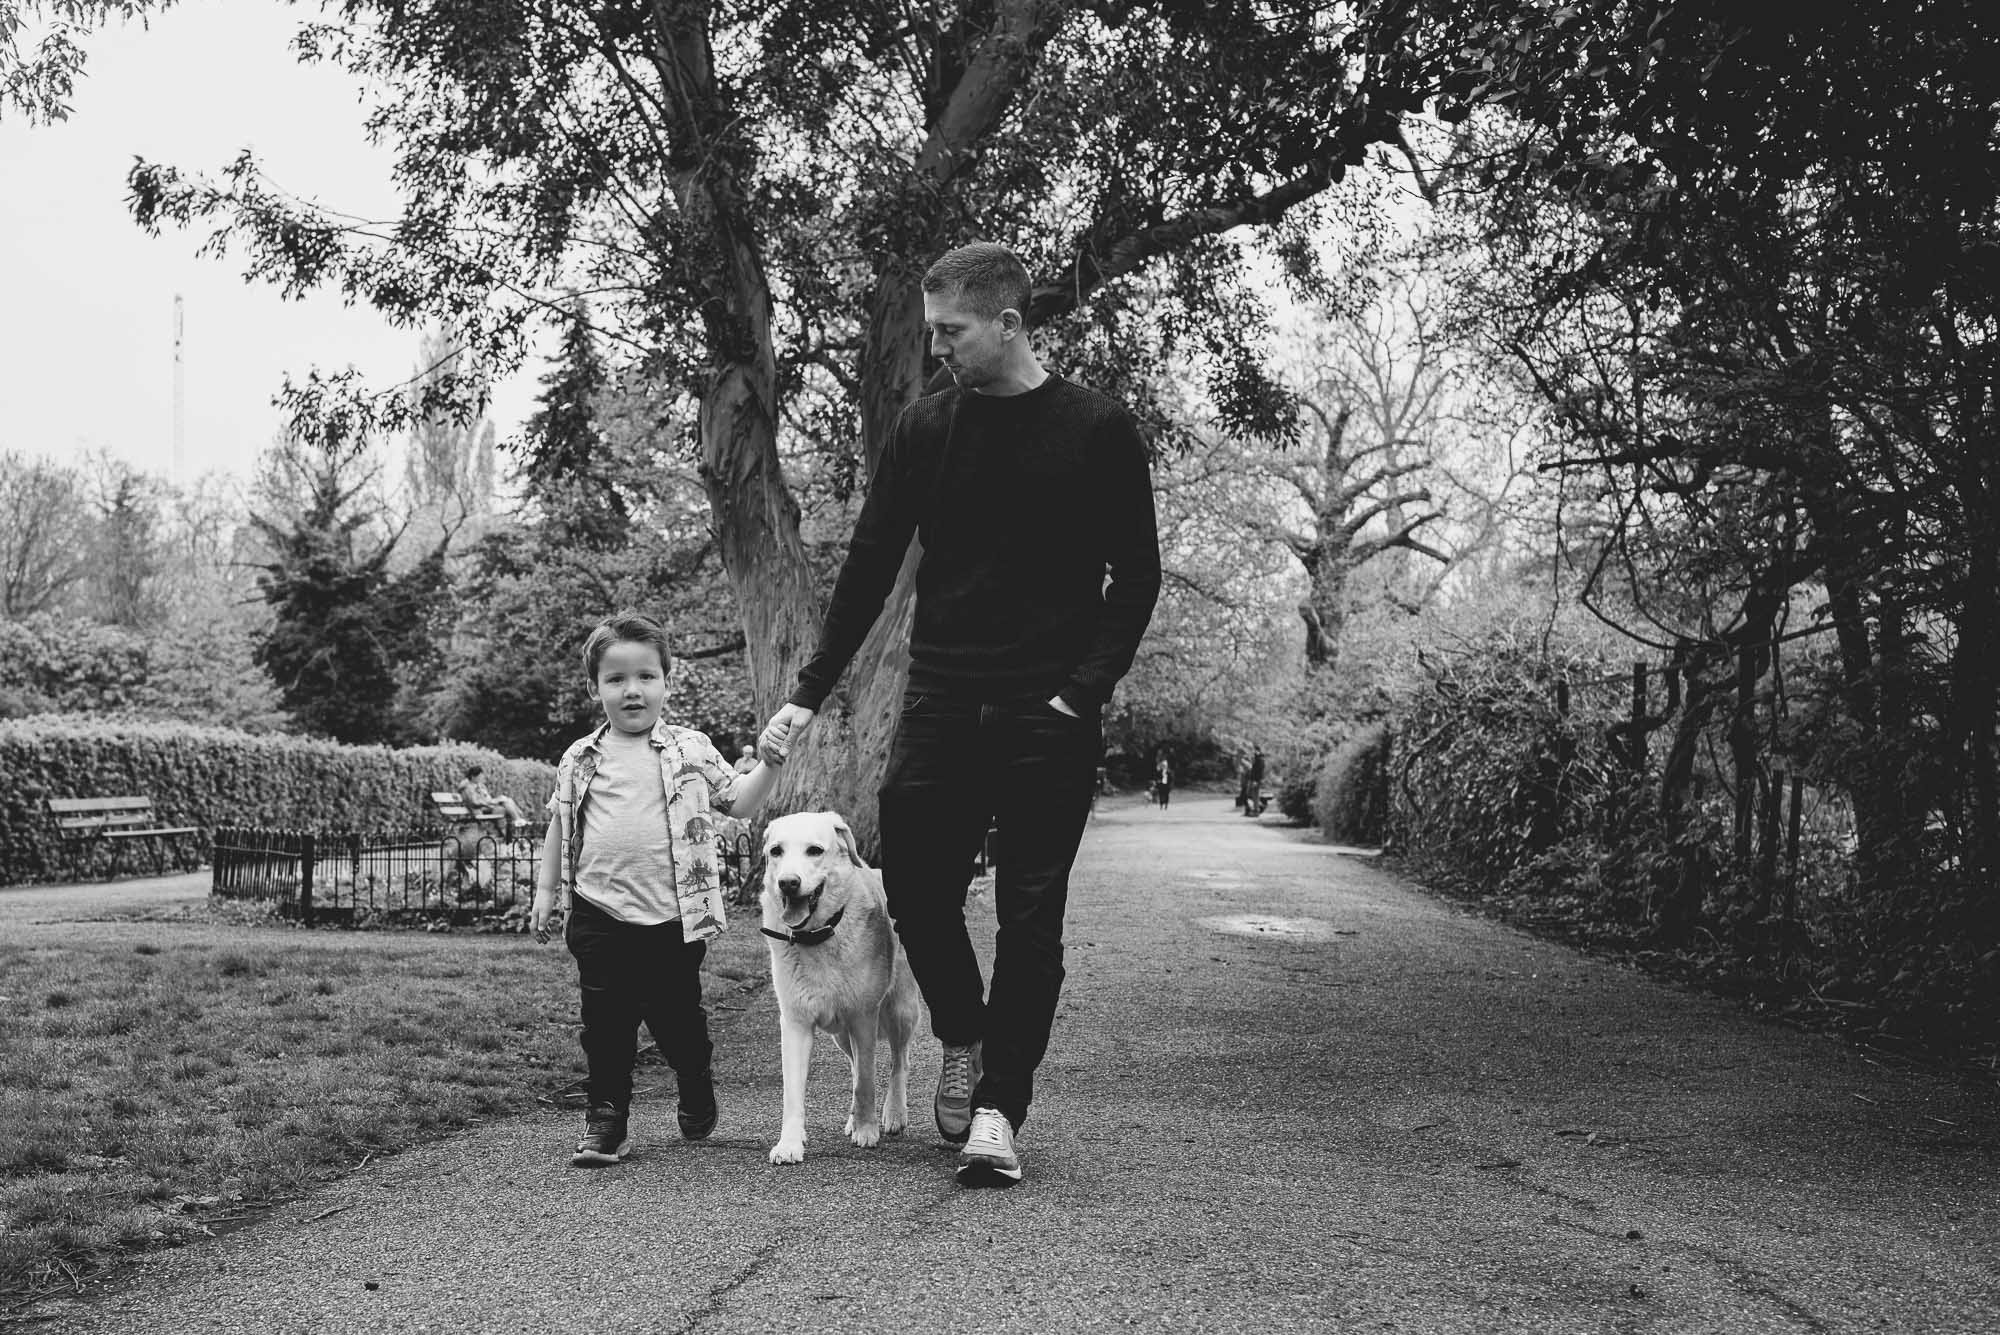 dad-dog-son-walking-peckham-rye-park-london-unposed-natural-family-photography.jpg